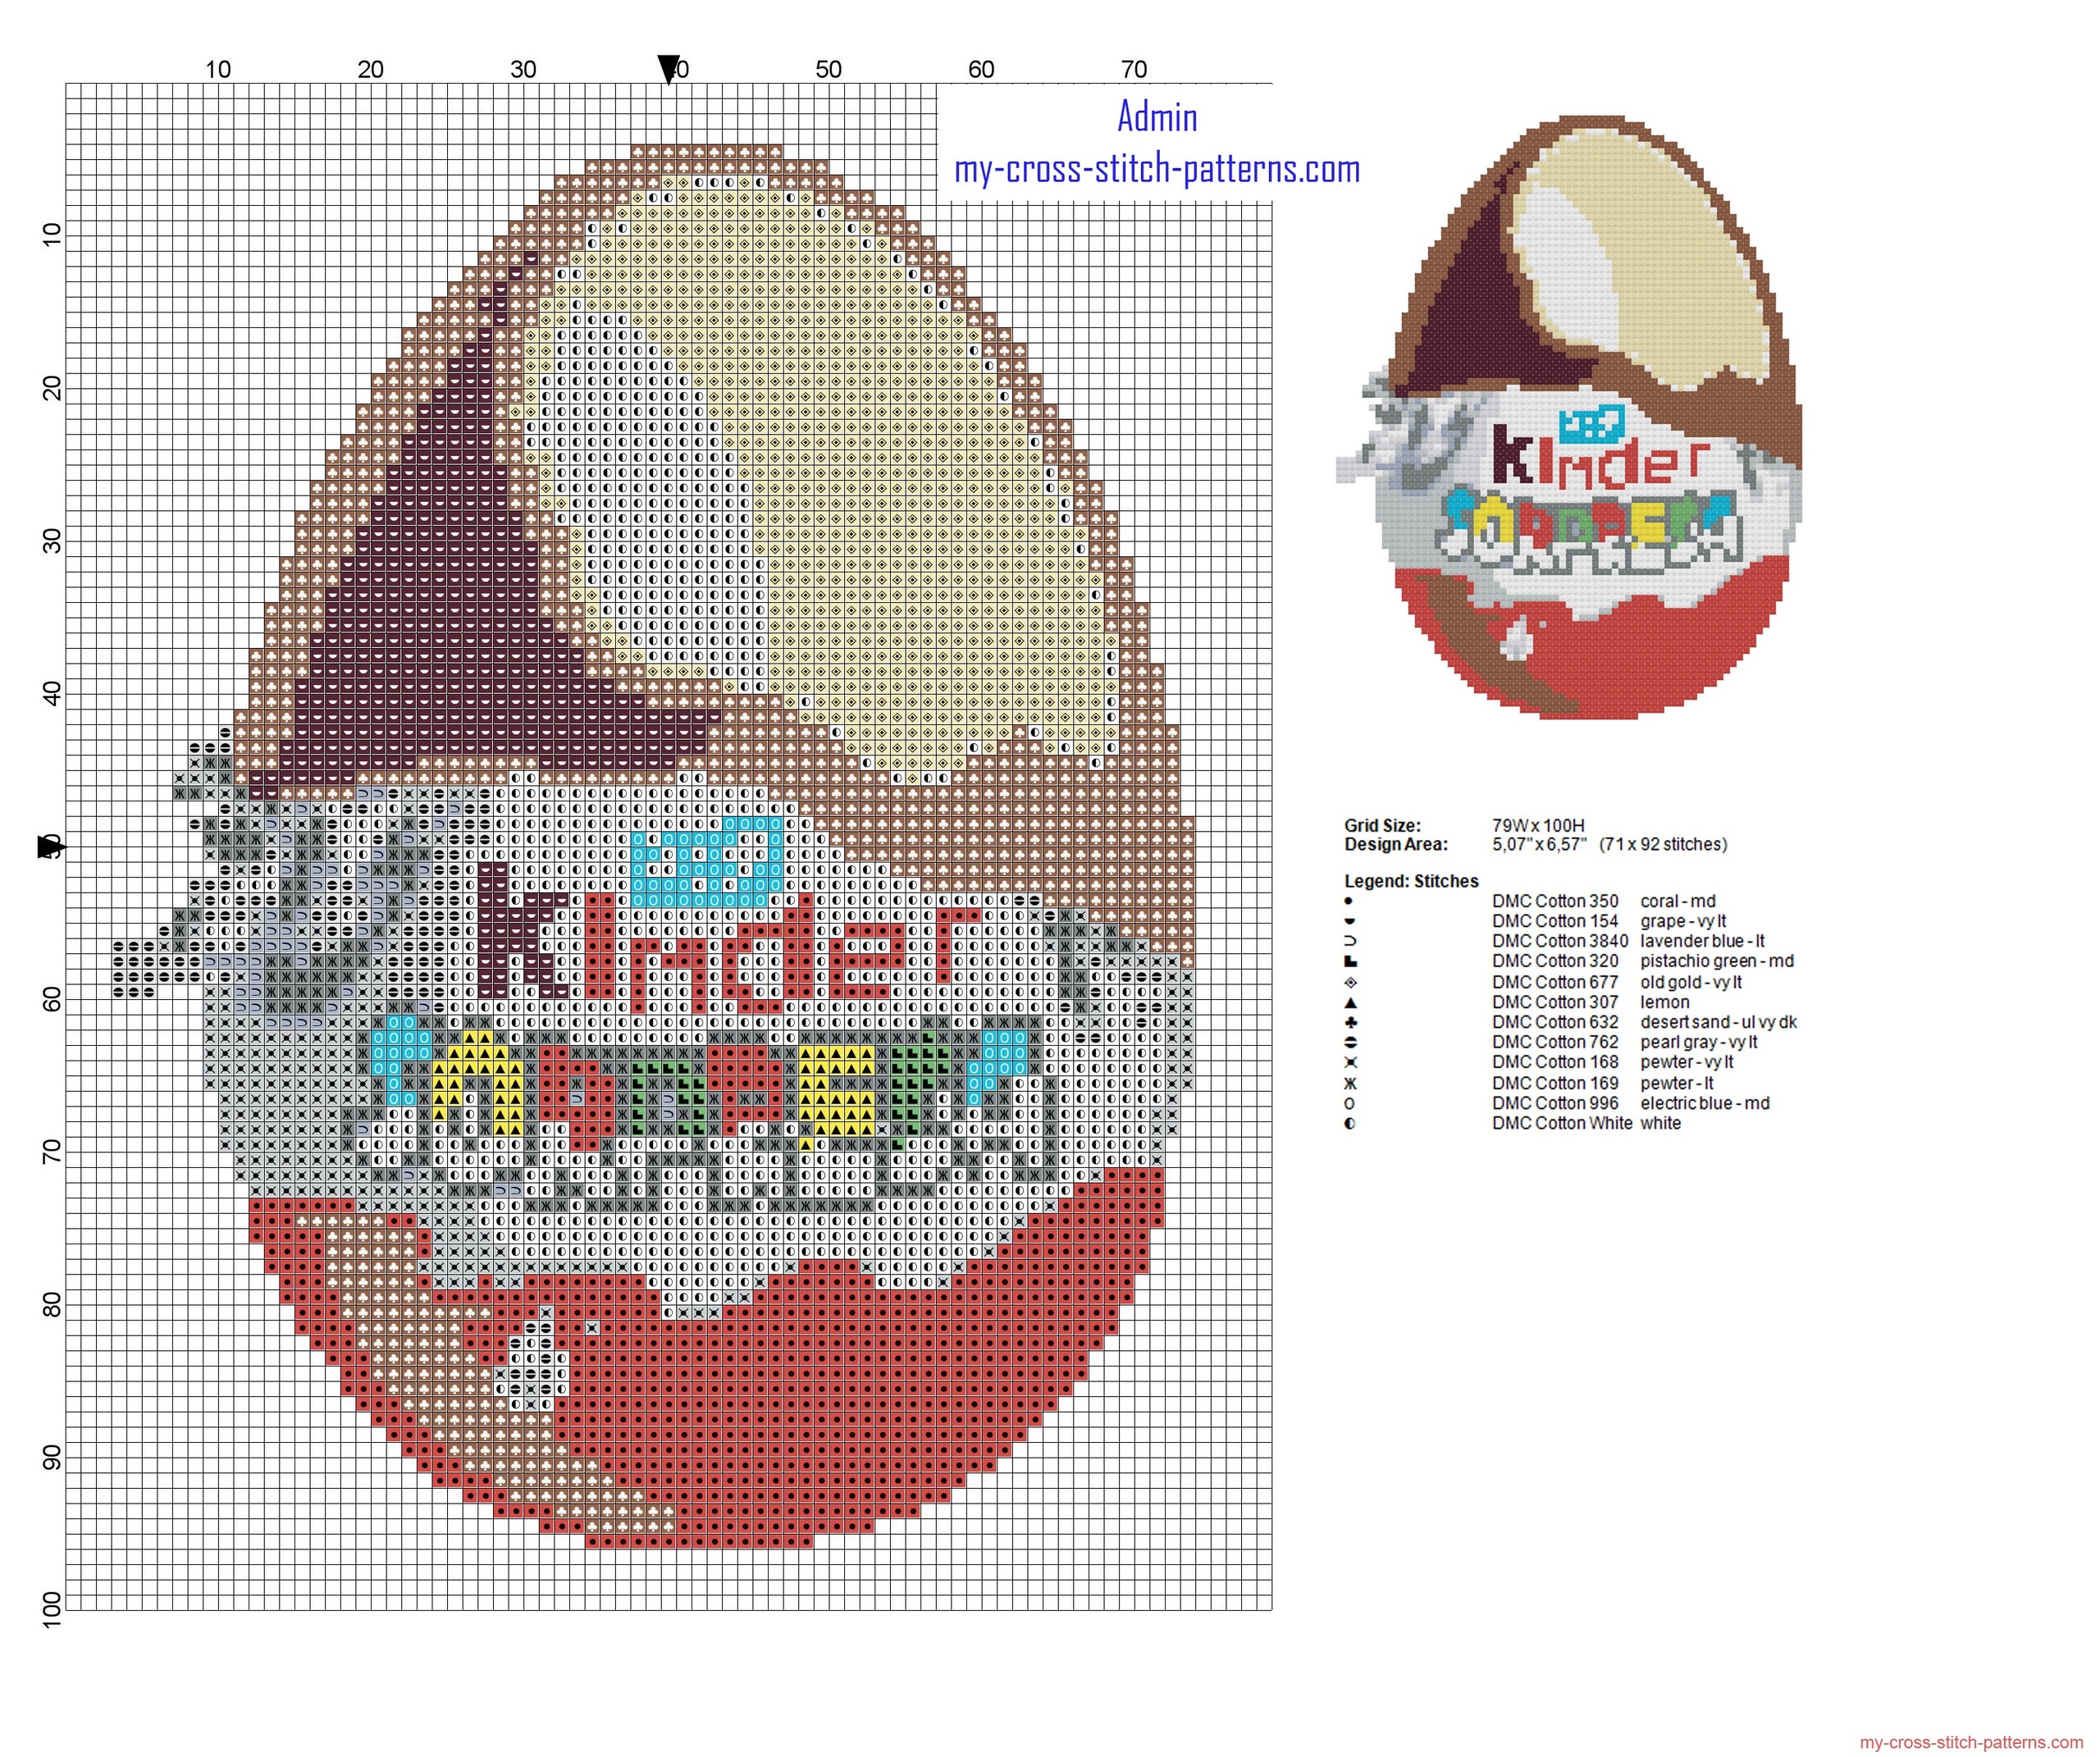 kinder_surprise_kinder_egg_cross_stitch_pattern_height_100_stitches